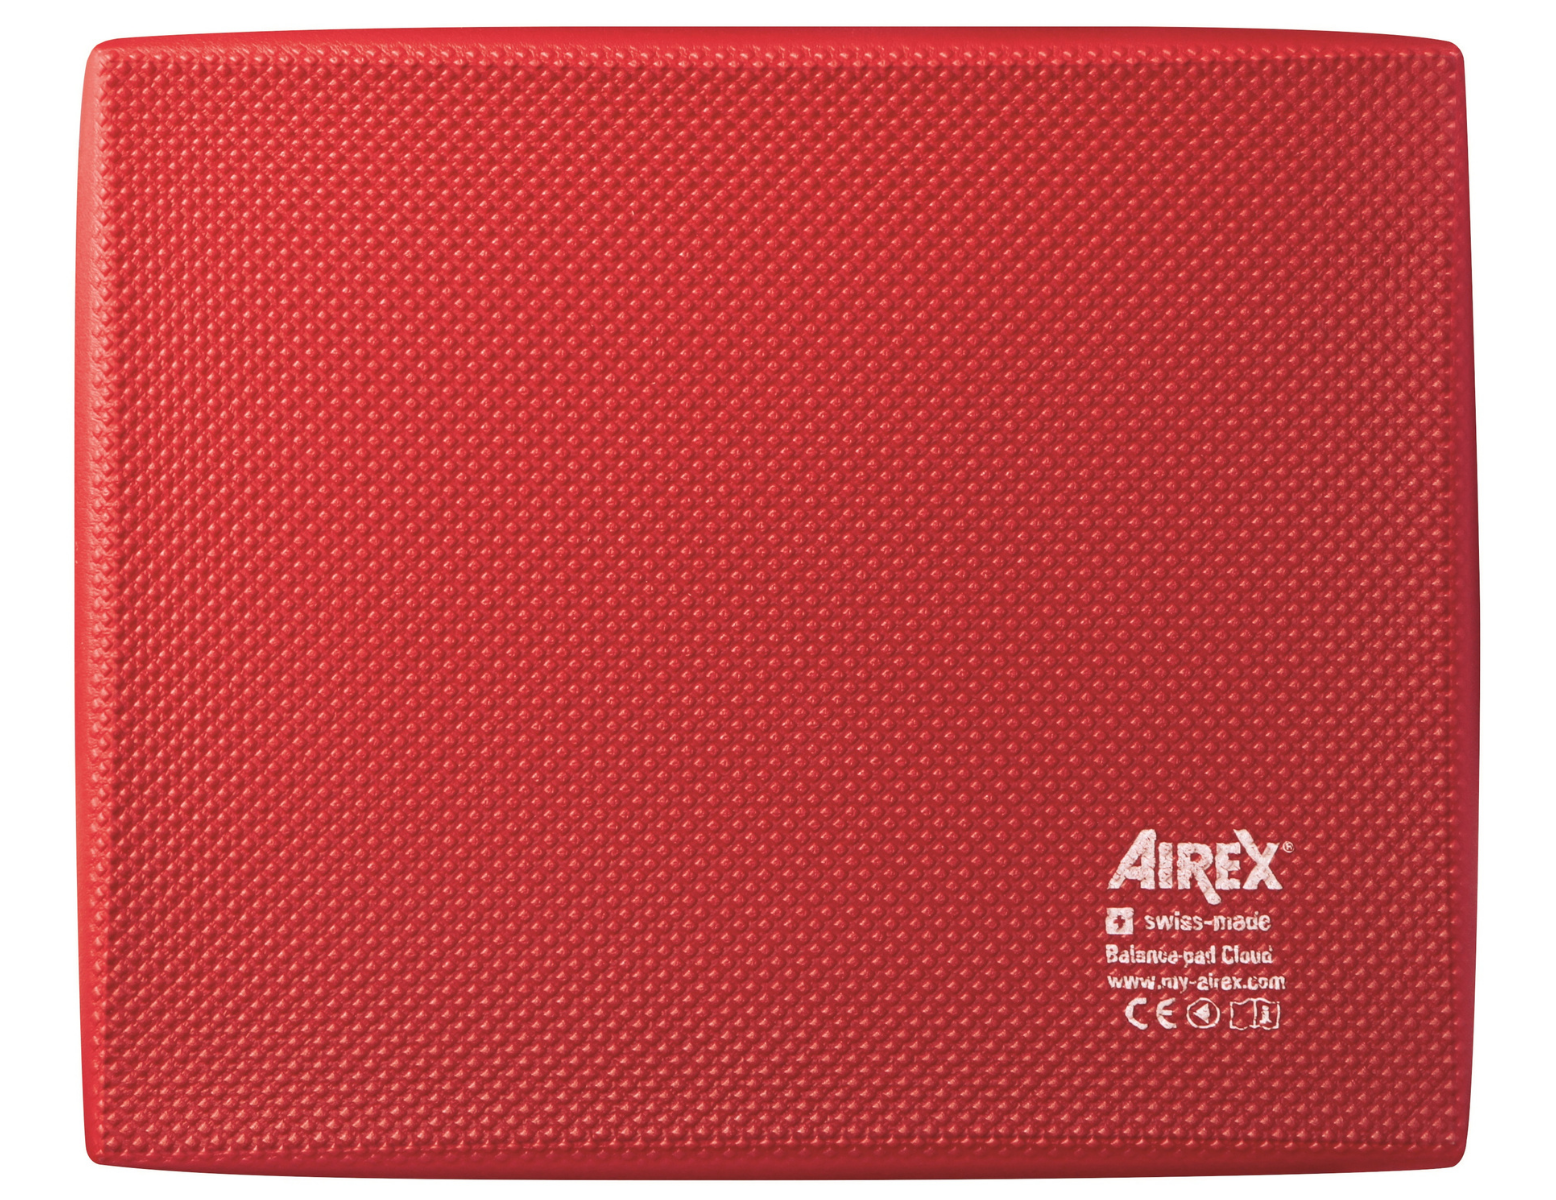 Airex Balance Pad Cloud - 50 x 41 x 6 cm - rood